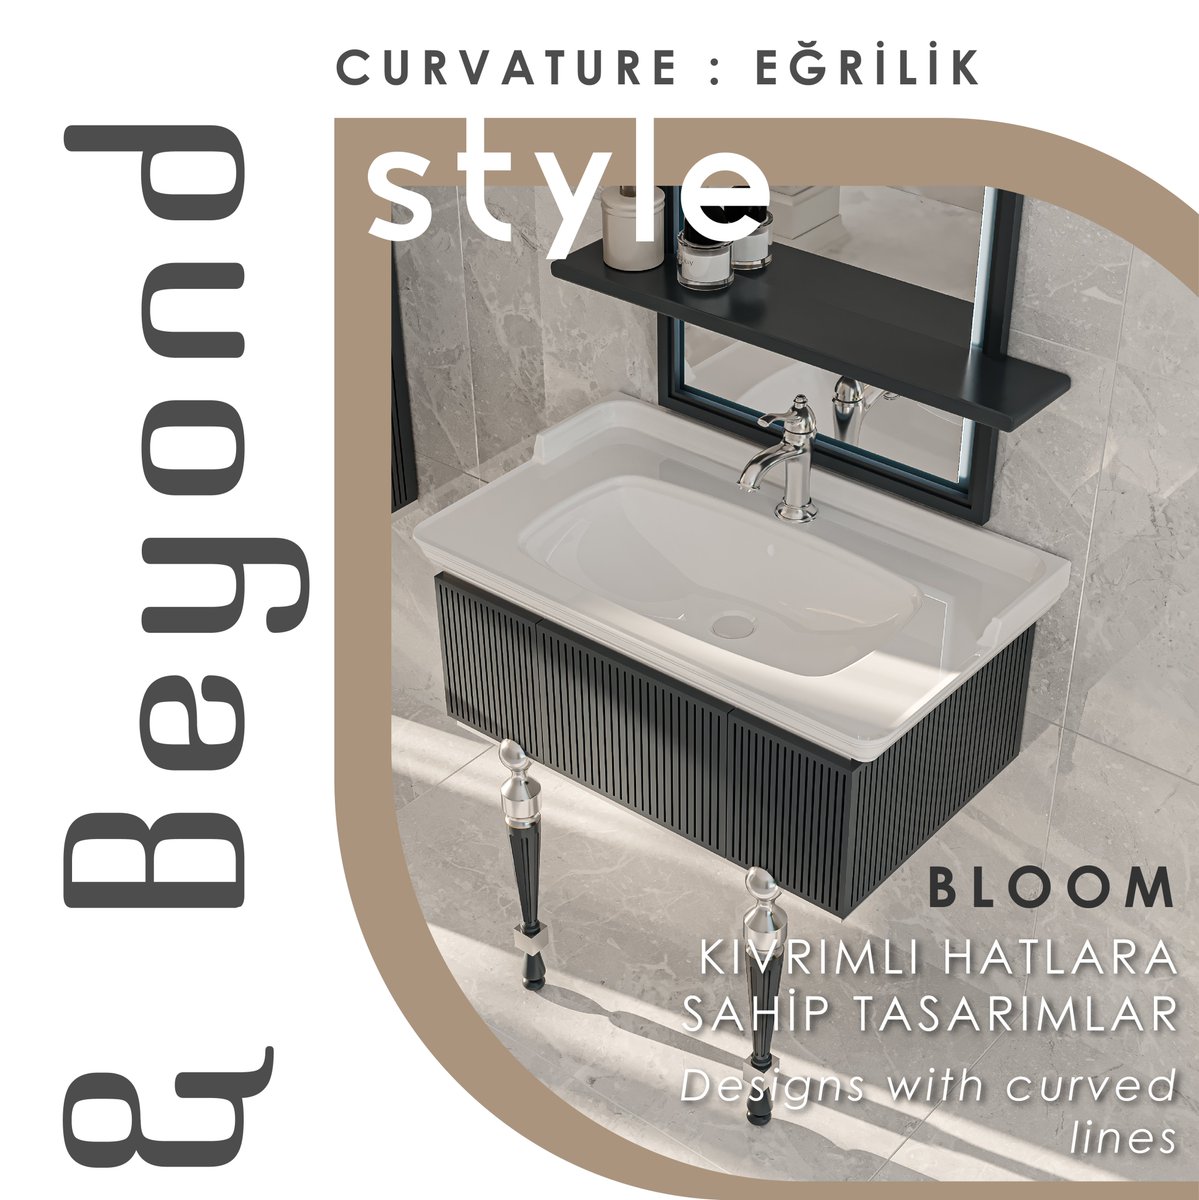 Bloom ile Curvature akımını banyolara taşıyın! Bring the Curvature trend to bathrooms with Bloom! #voq #voqbagno #lamodainbagno #arredobagno #bathroomfurniture #banyomobilyası #bloom #curvature